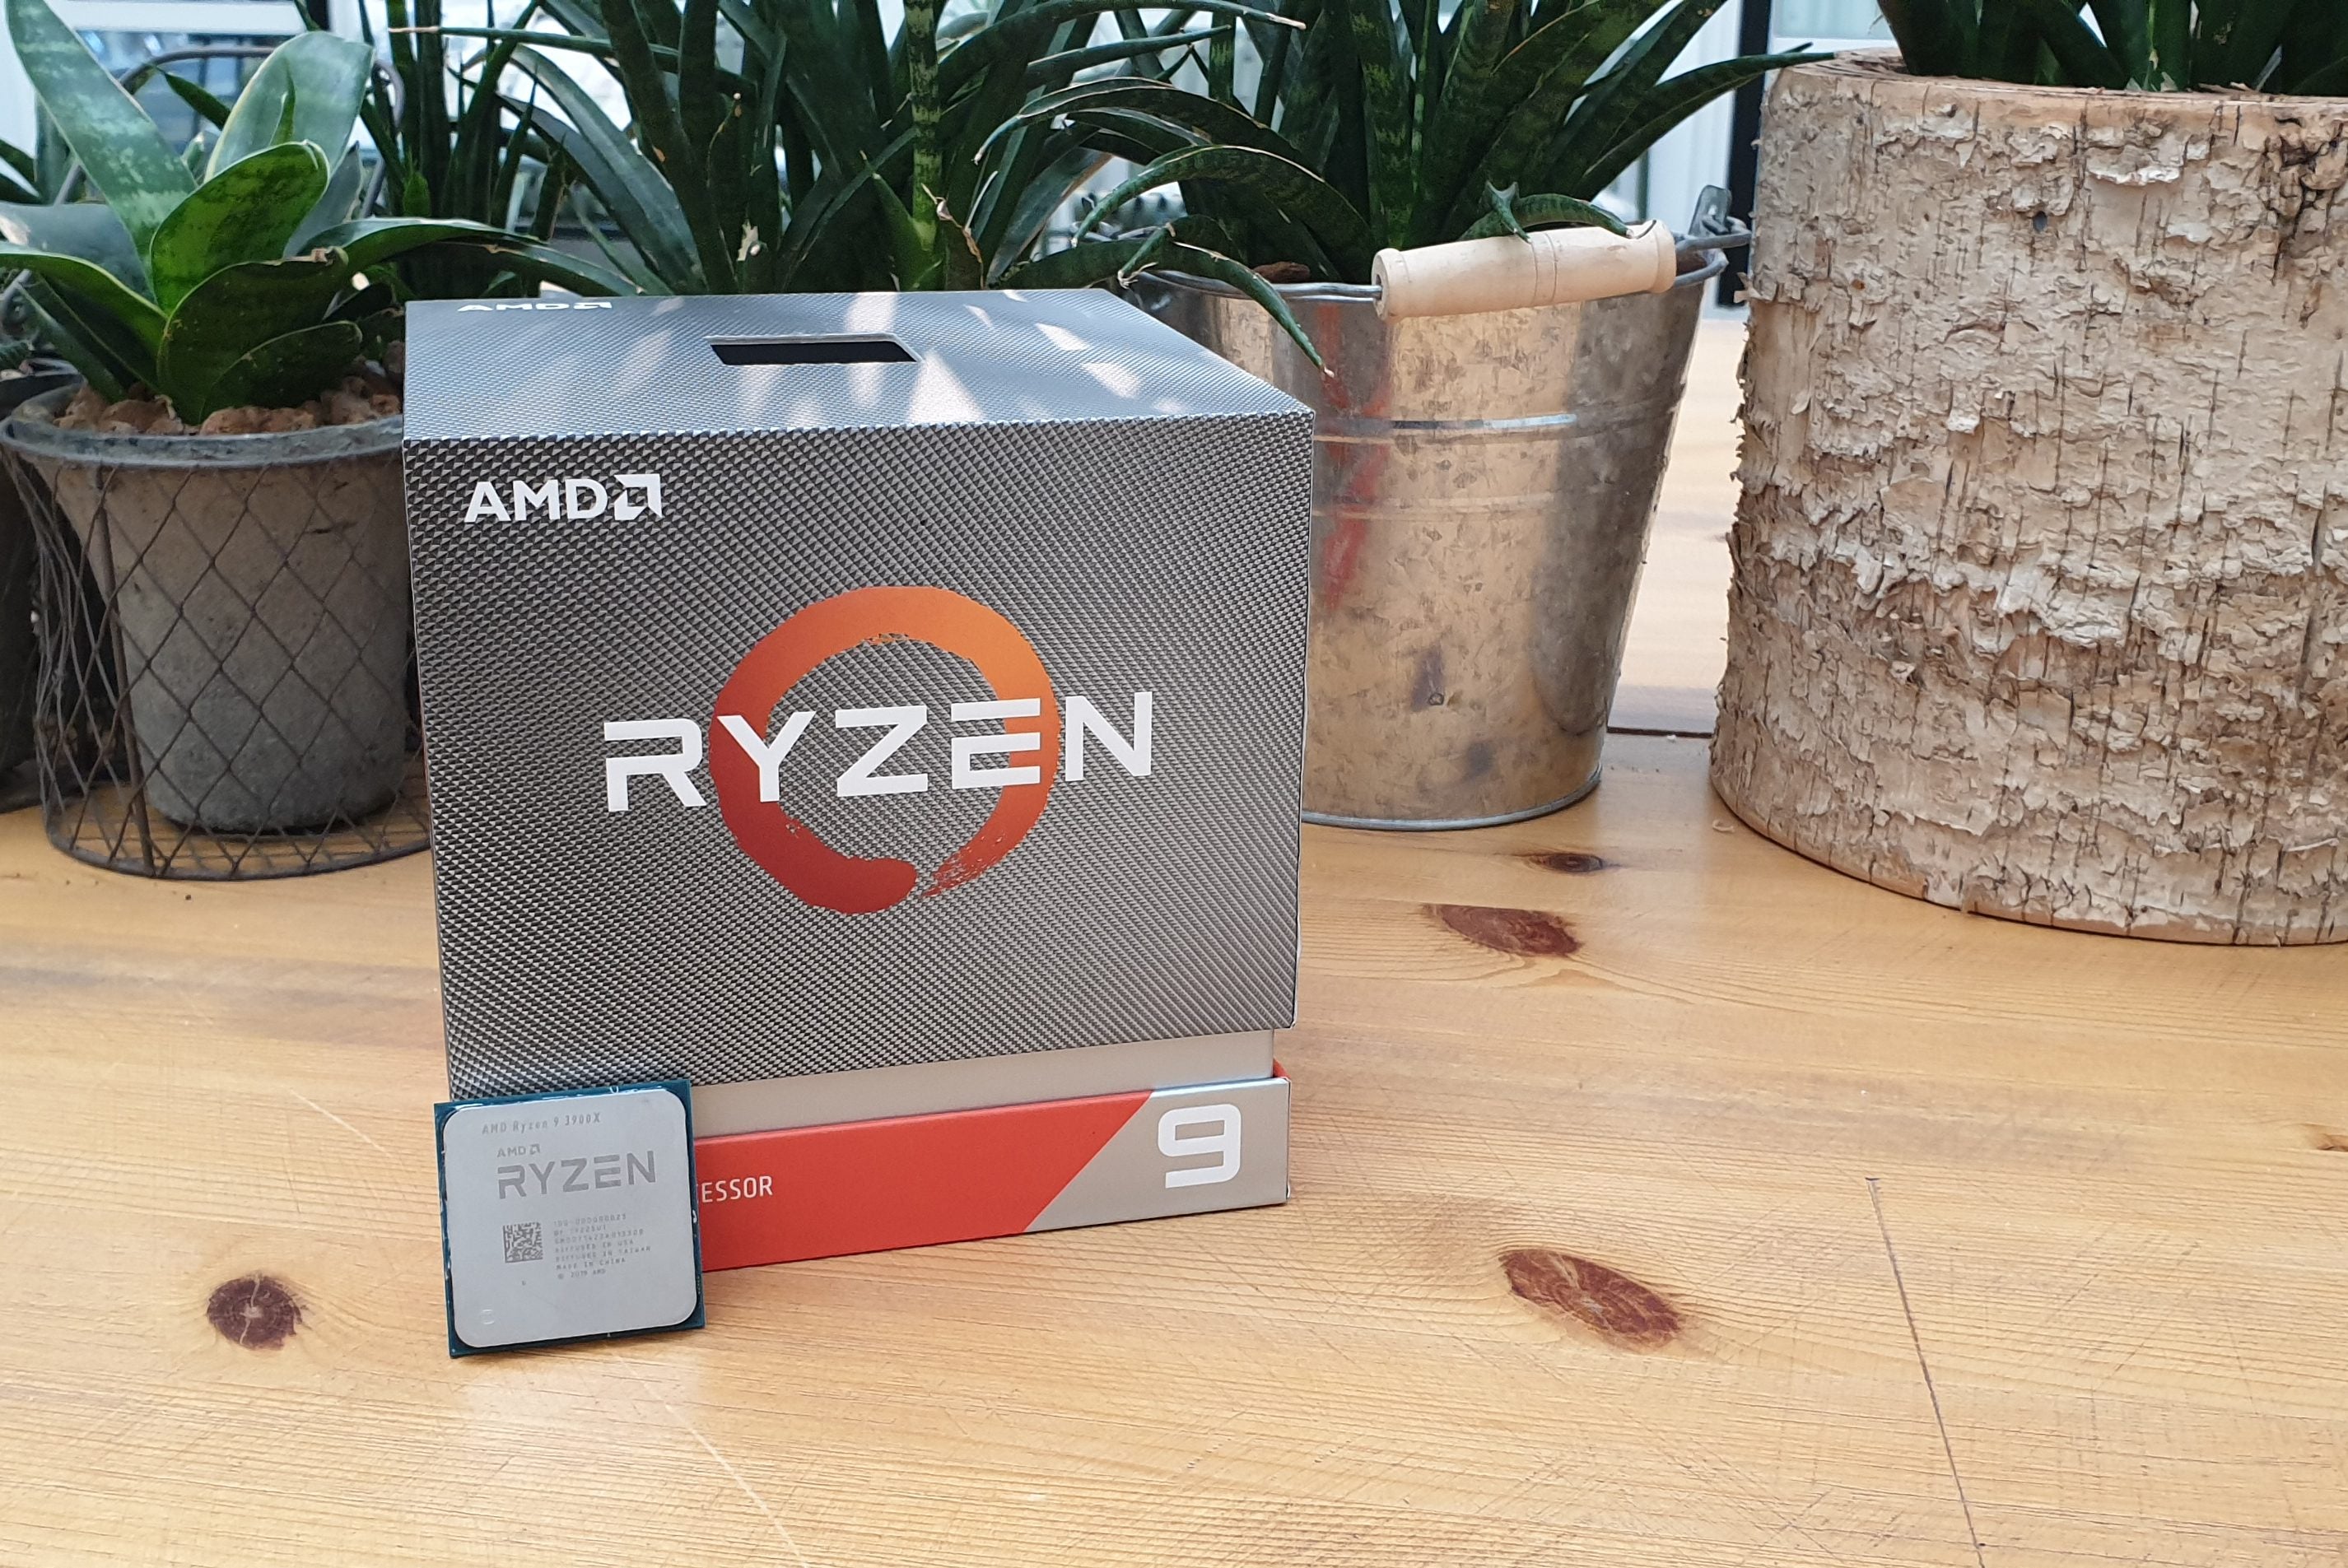 AMD Ryzen 9 3900X: A challenger for Intel's CPU crown